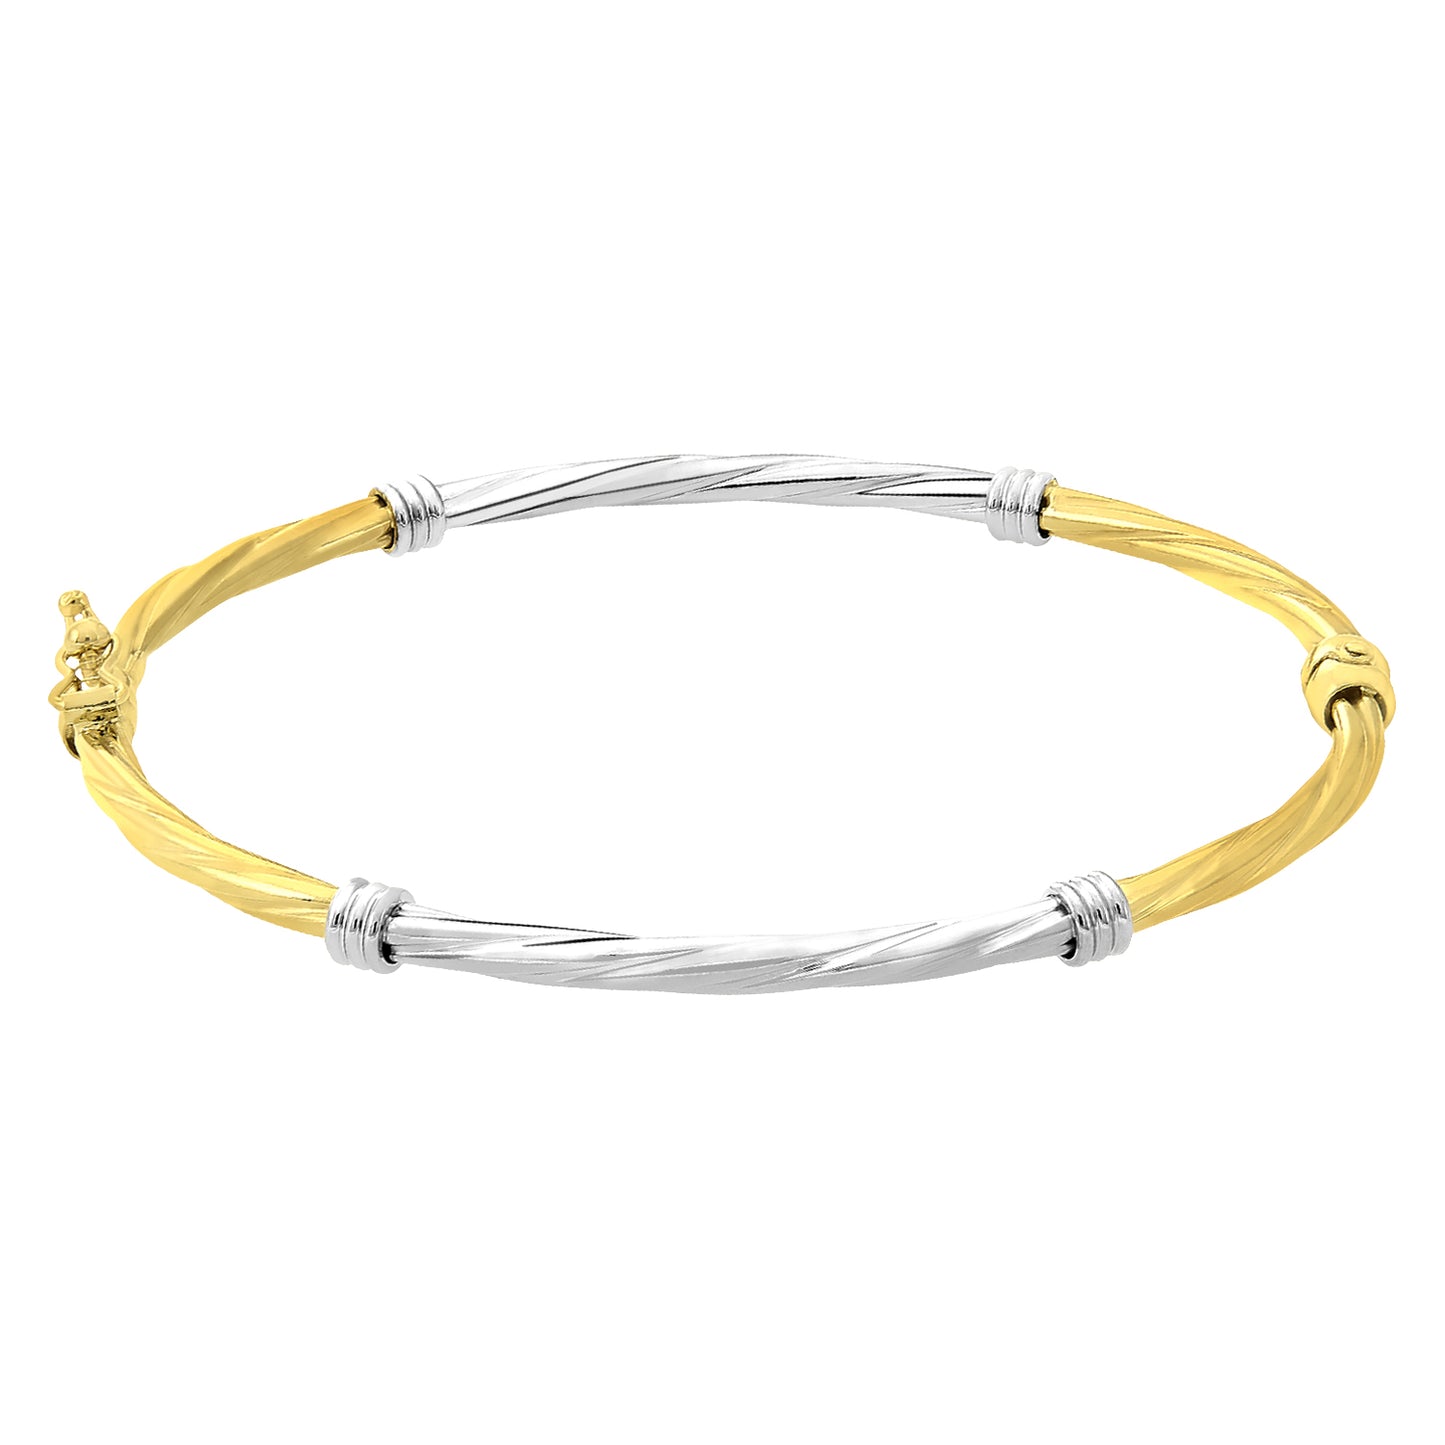 9ct White & Yellow Gold  Collar Tube Twist Bangle Bracelet 2.5mm - BNGAXL1501YW